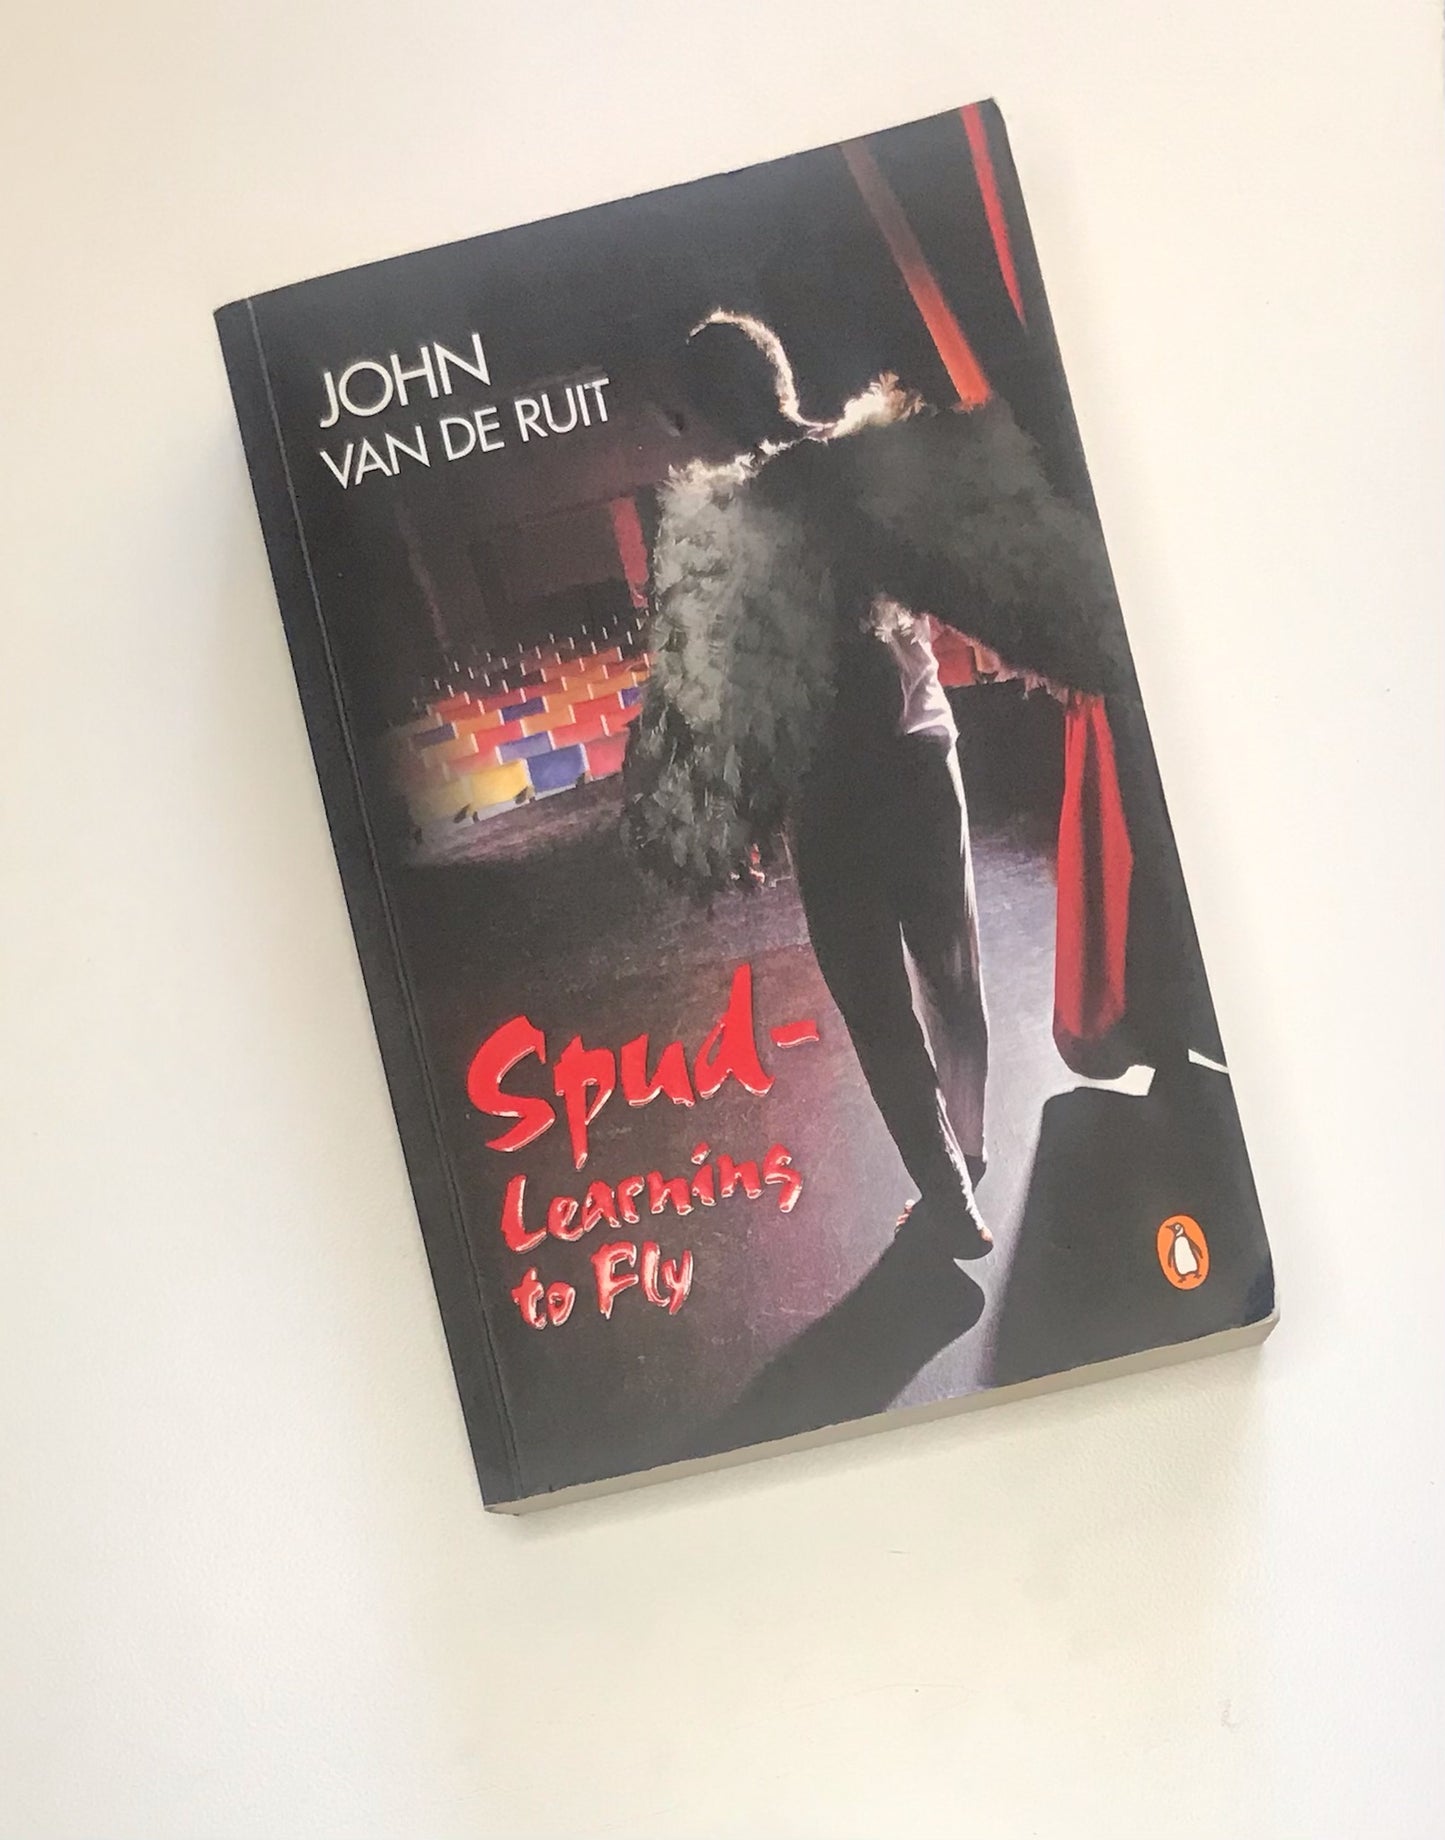 Spud - Learning to fly - John van de Ruit (Signed)